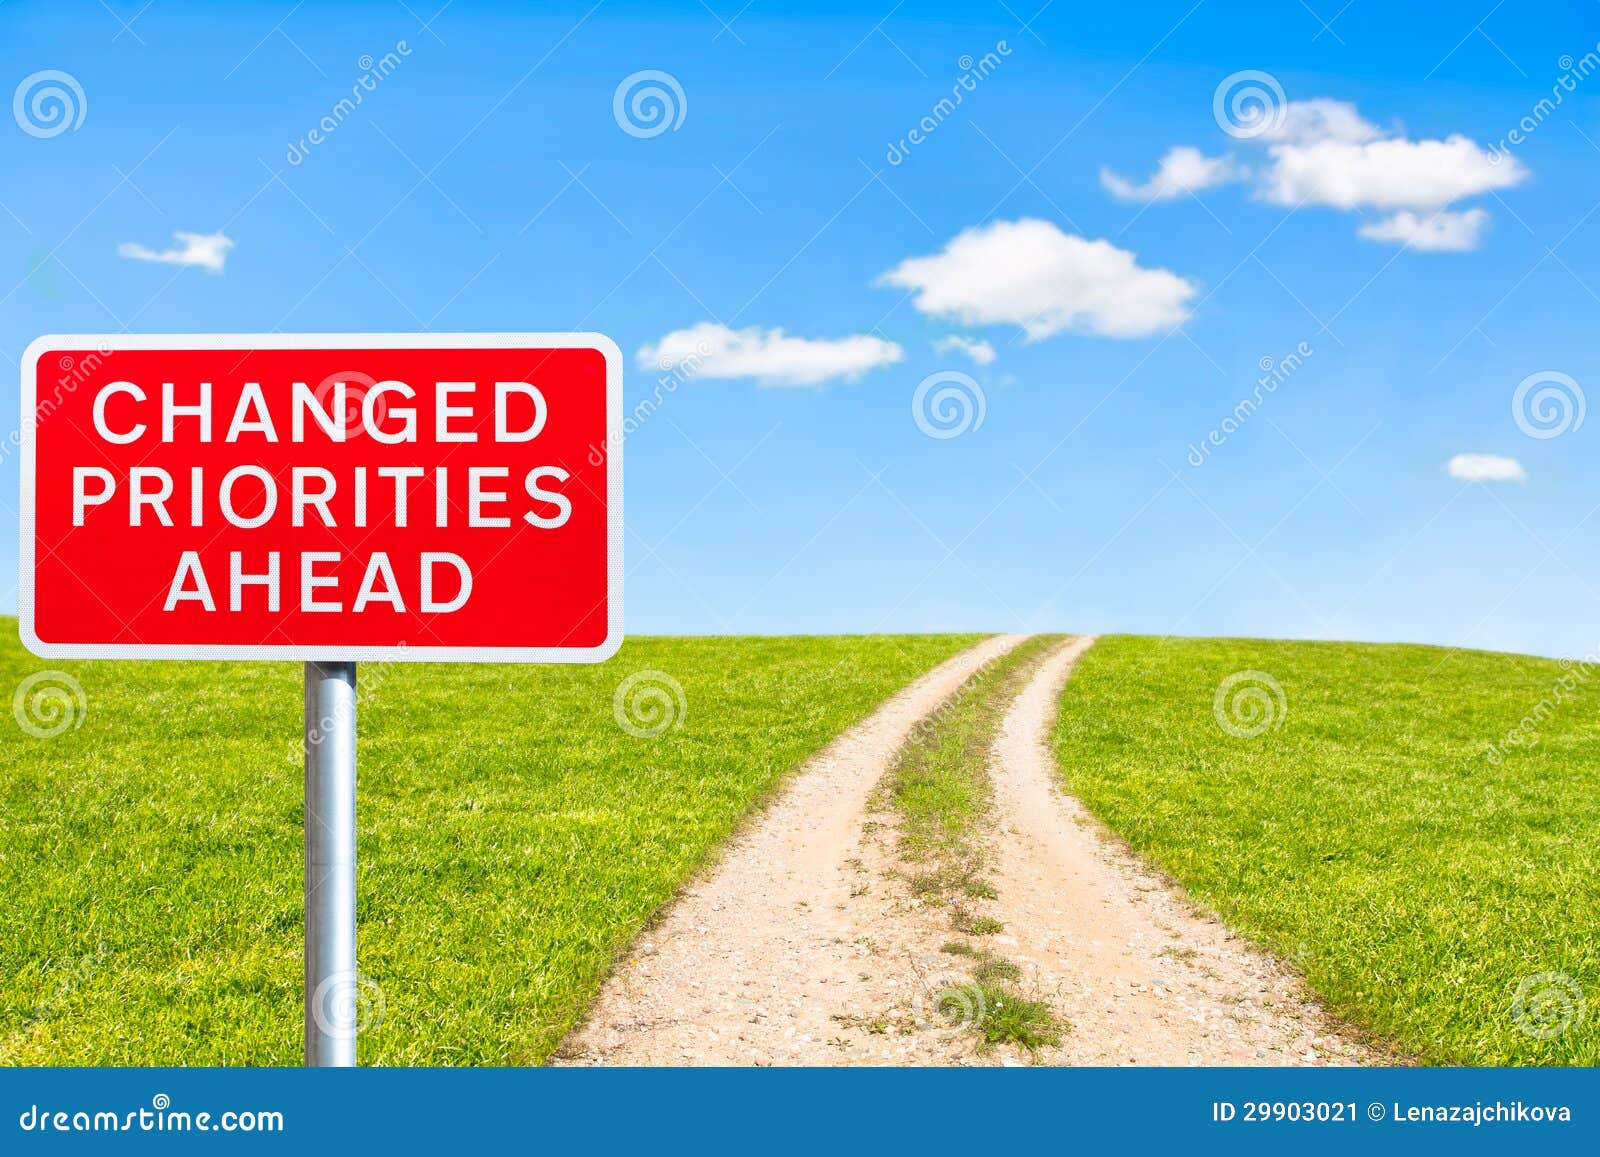 road sign priorities changed ahead